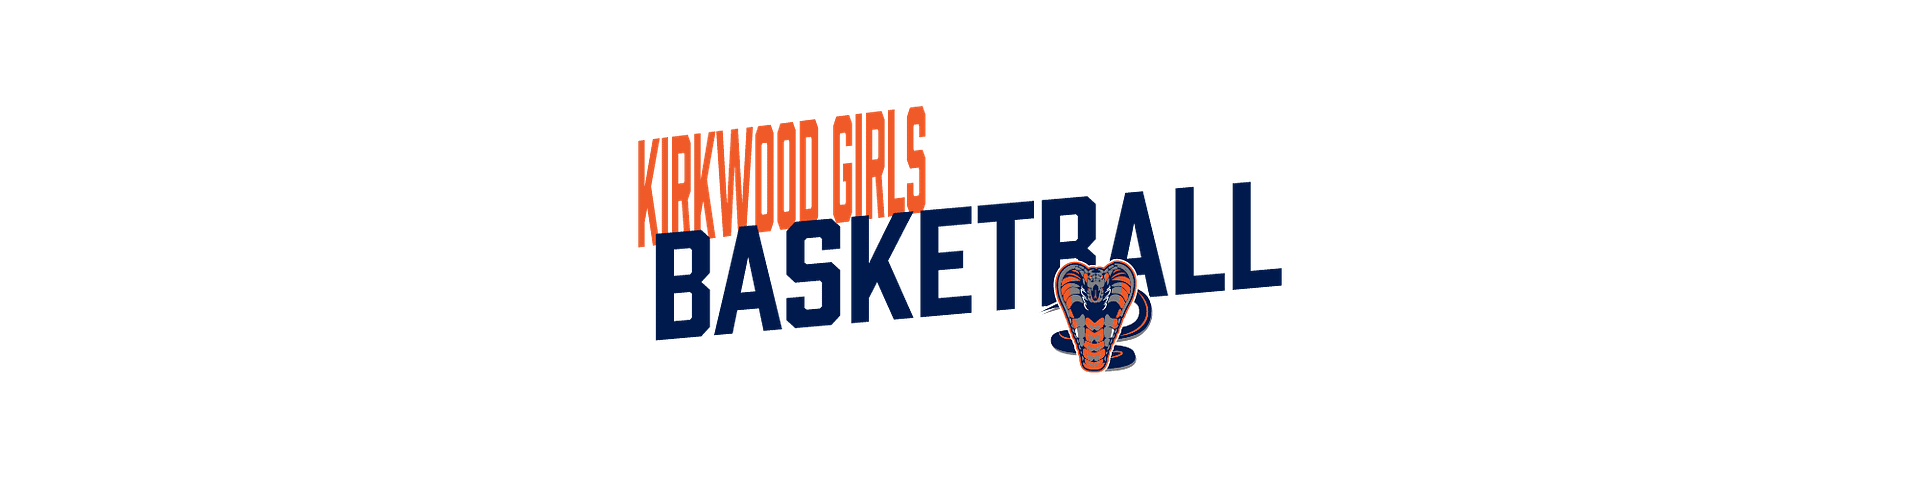 Kirkwood Girls Basketball